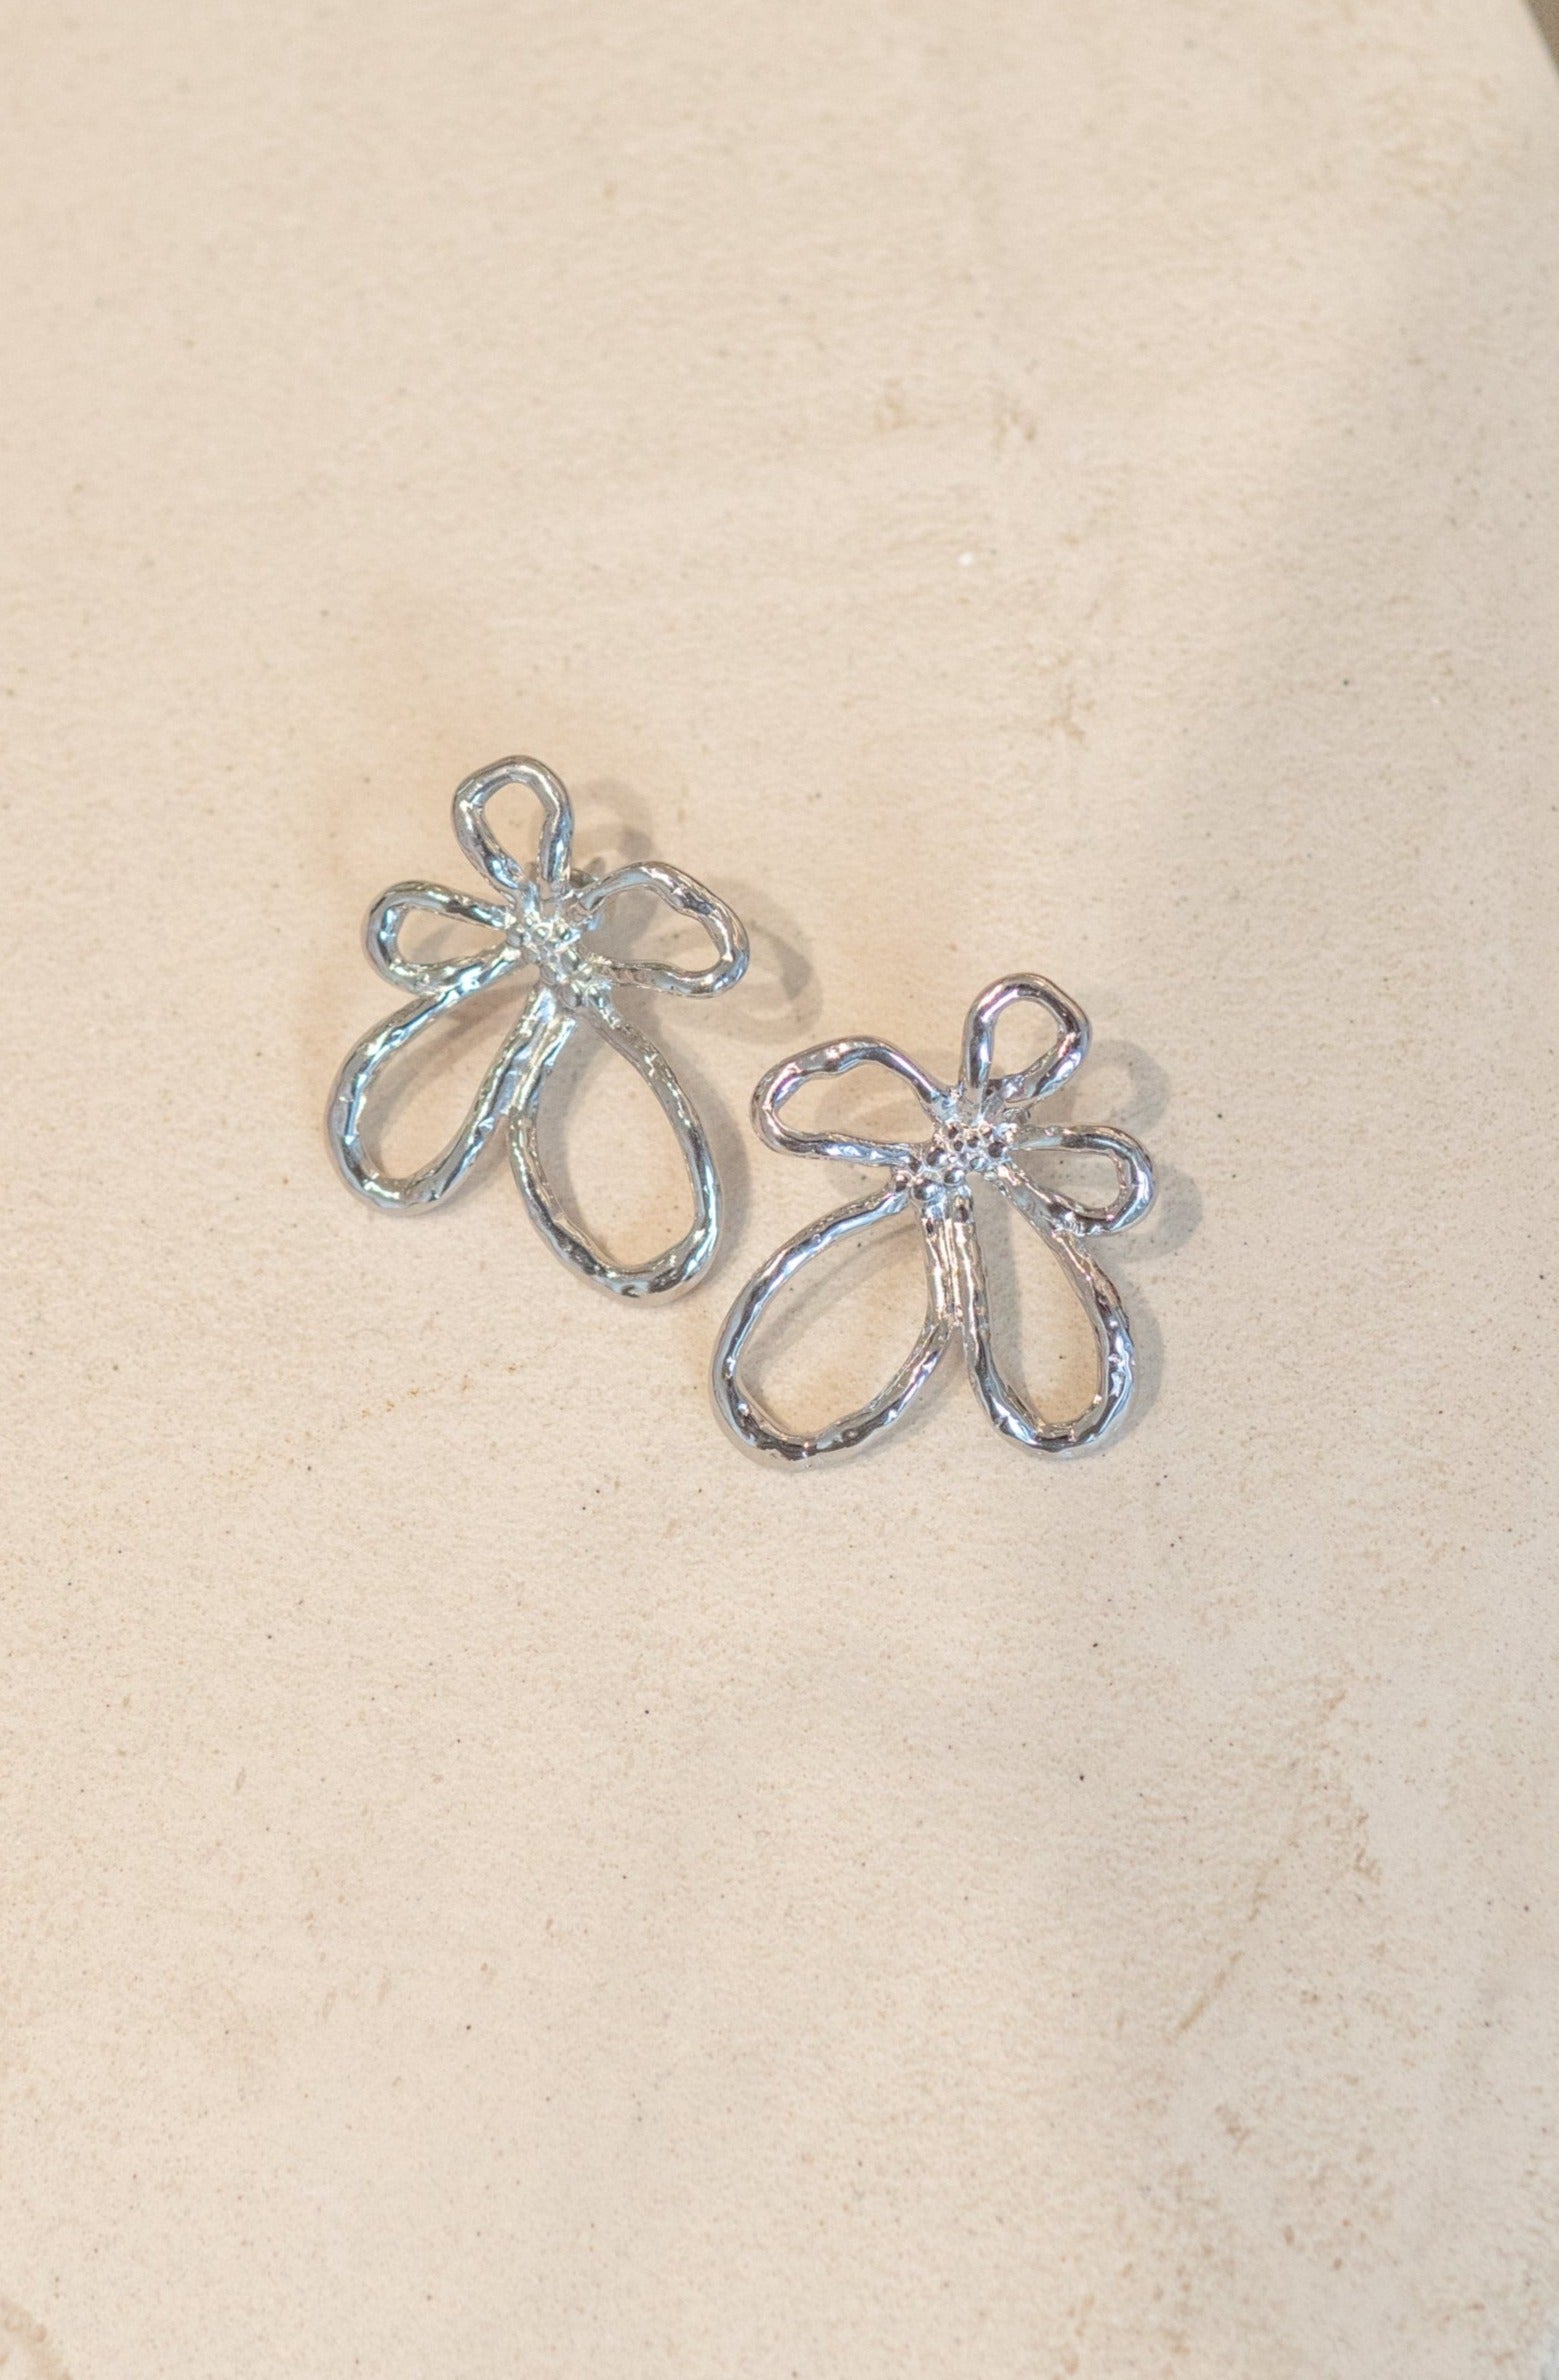 Organic Flower Earrings Stainless Steel Silver